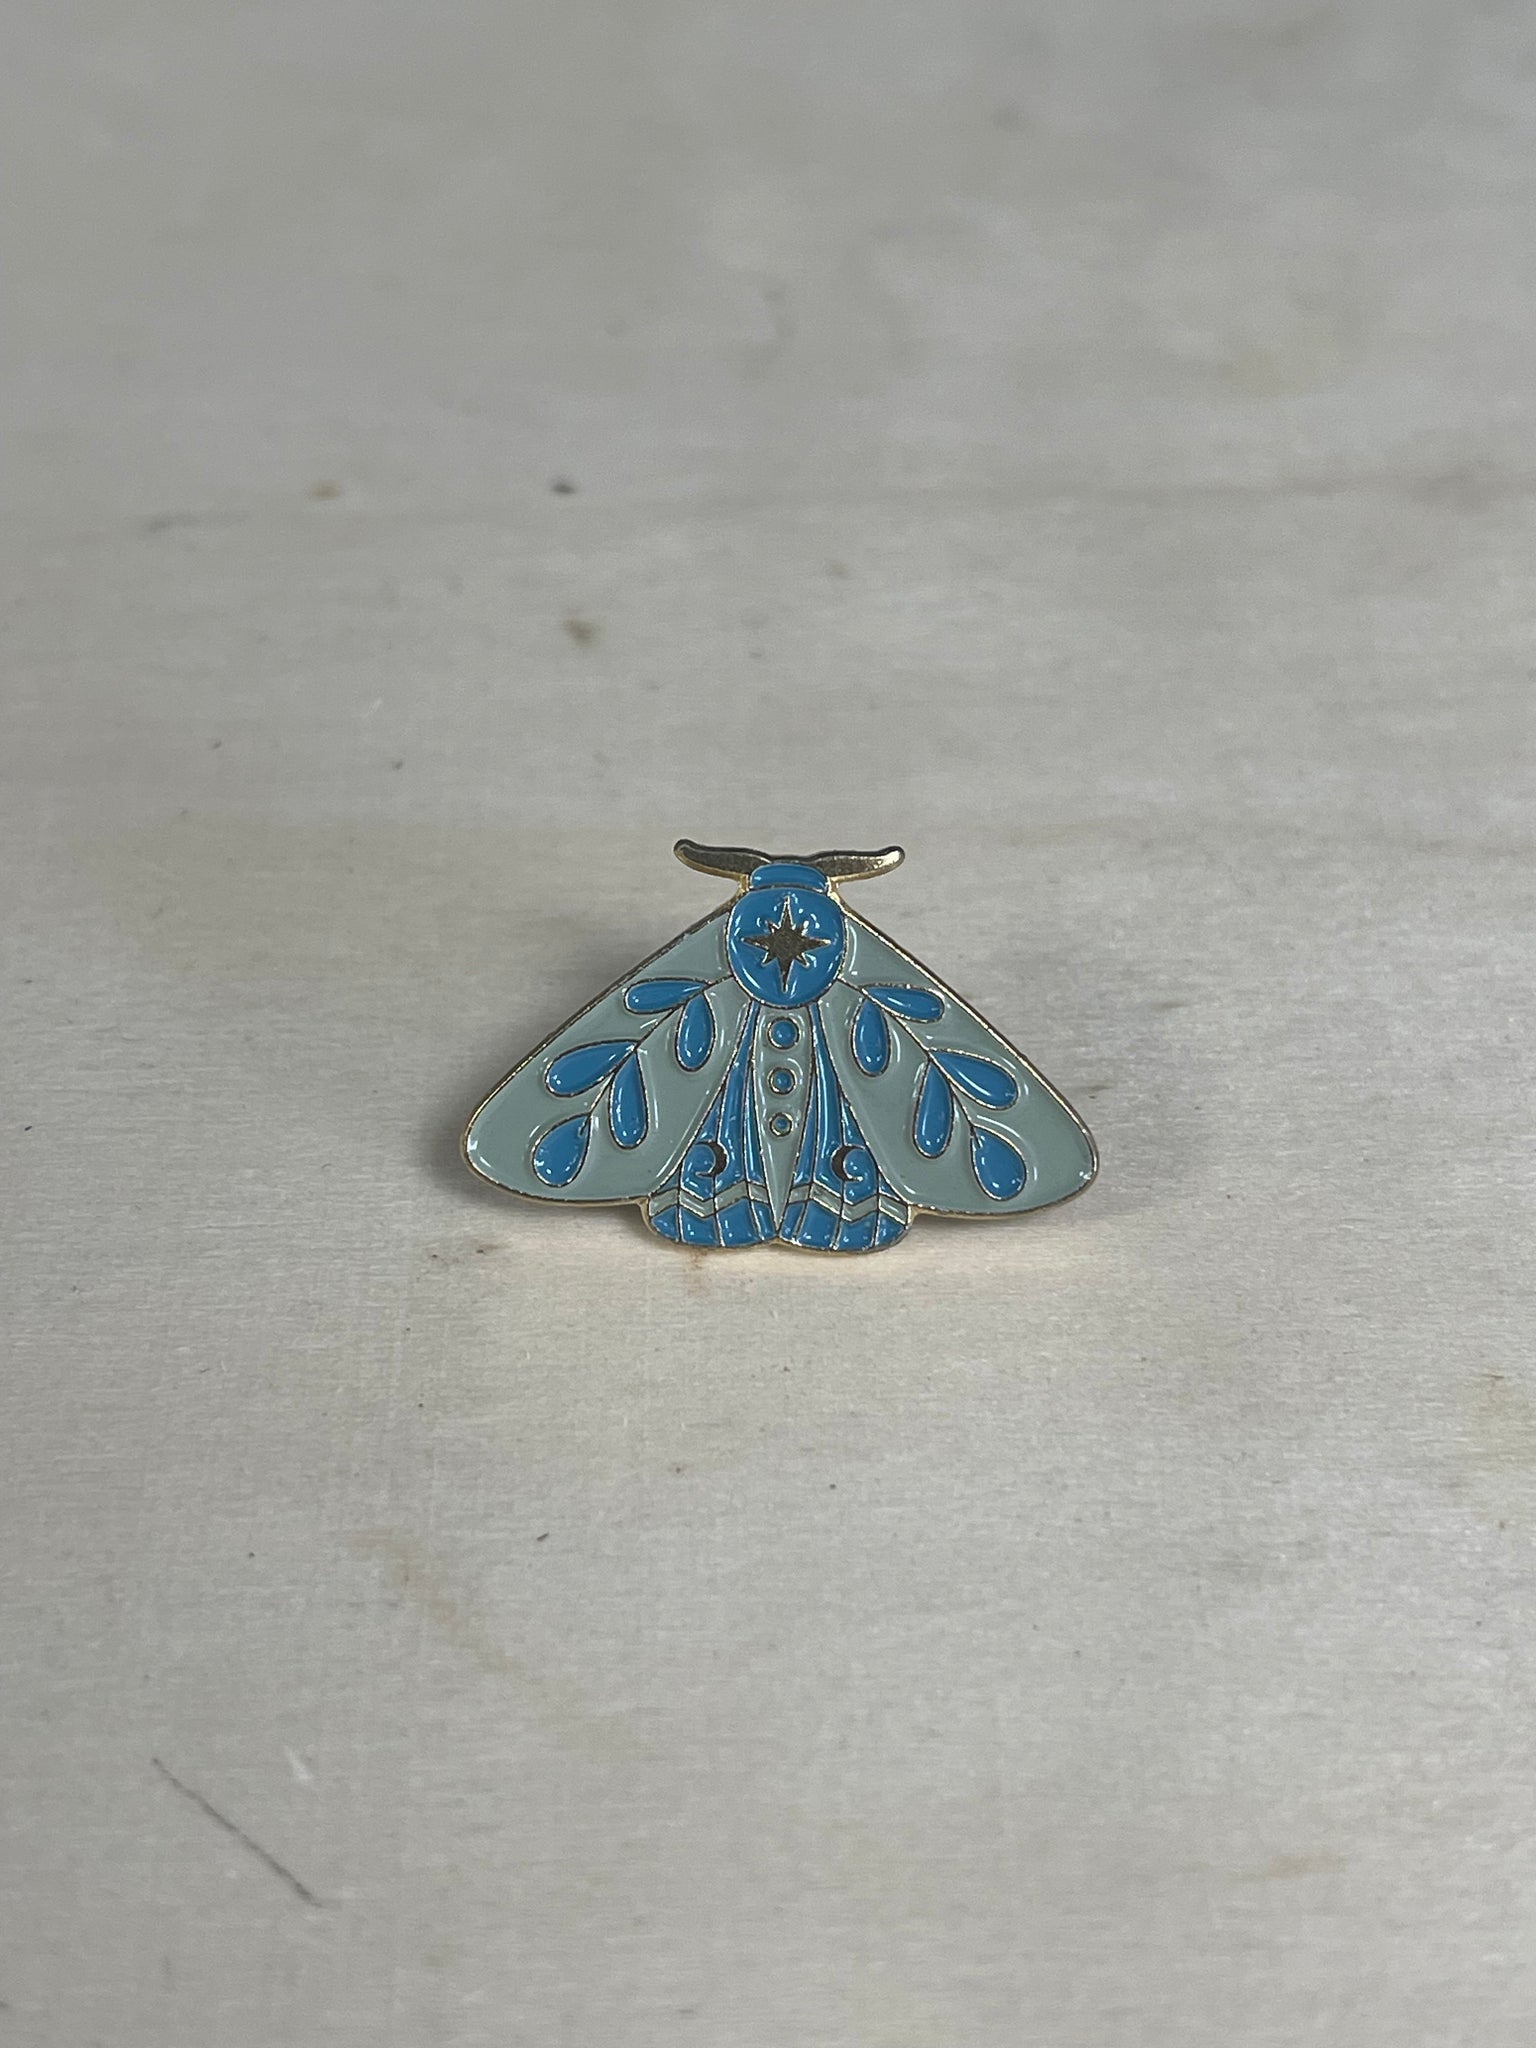 Blue Moth Pin